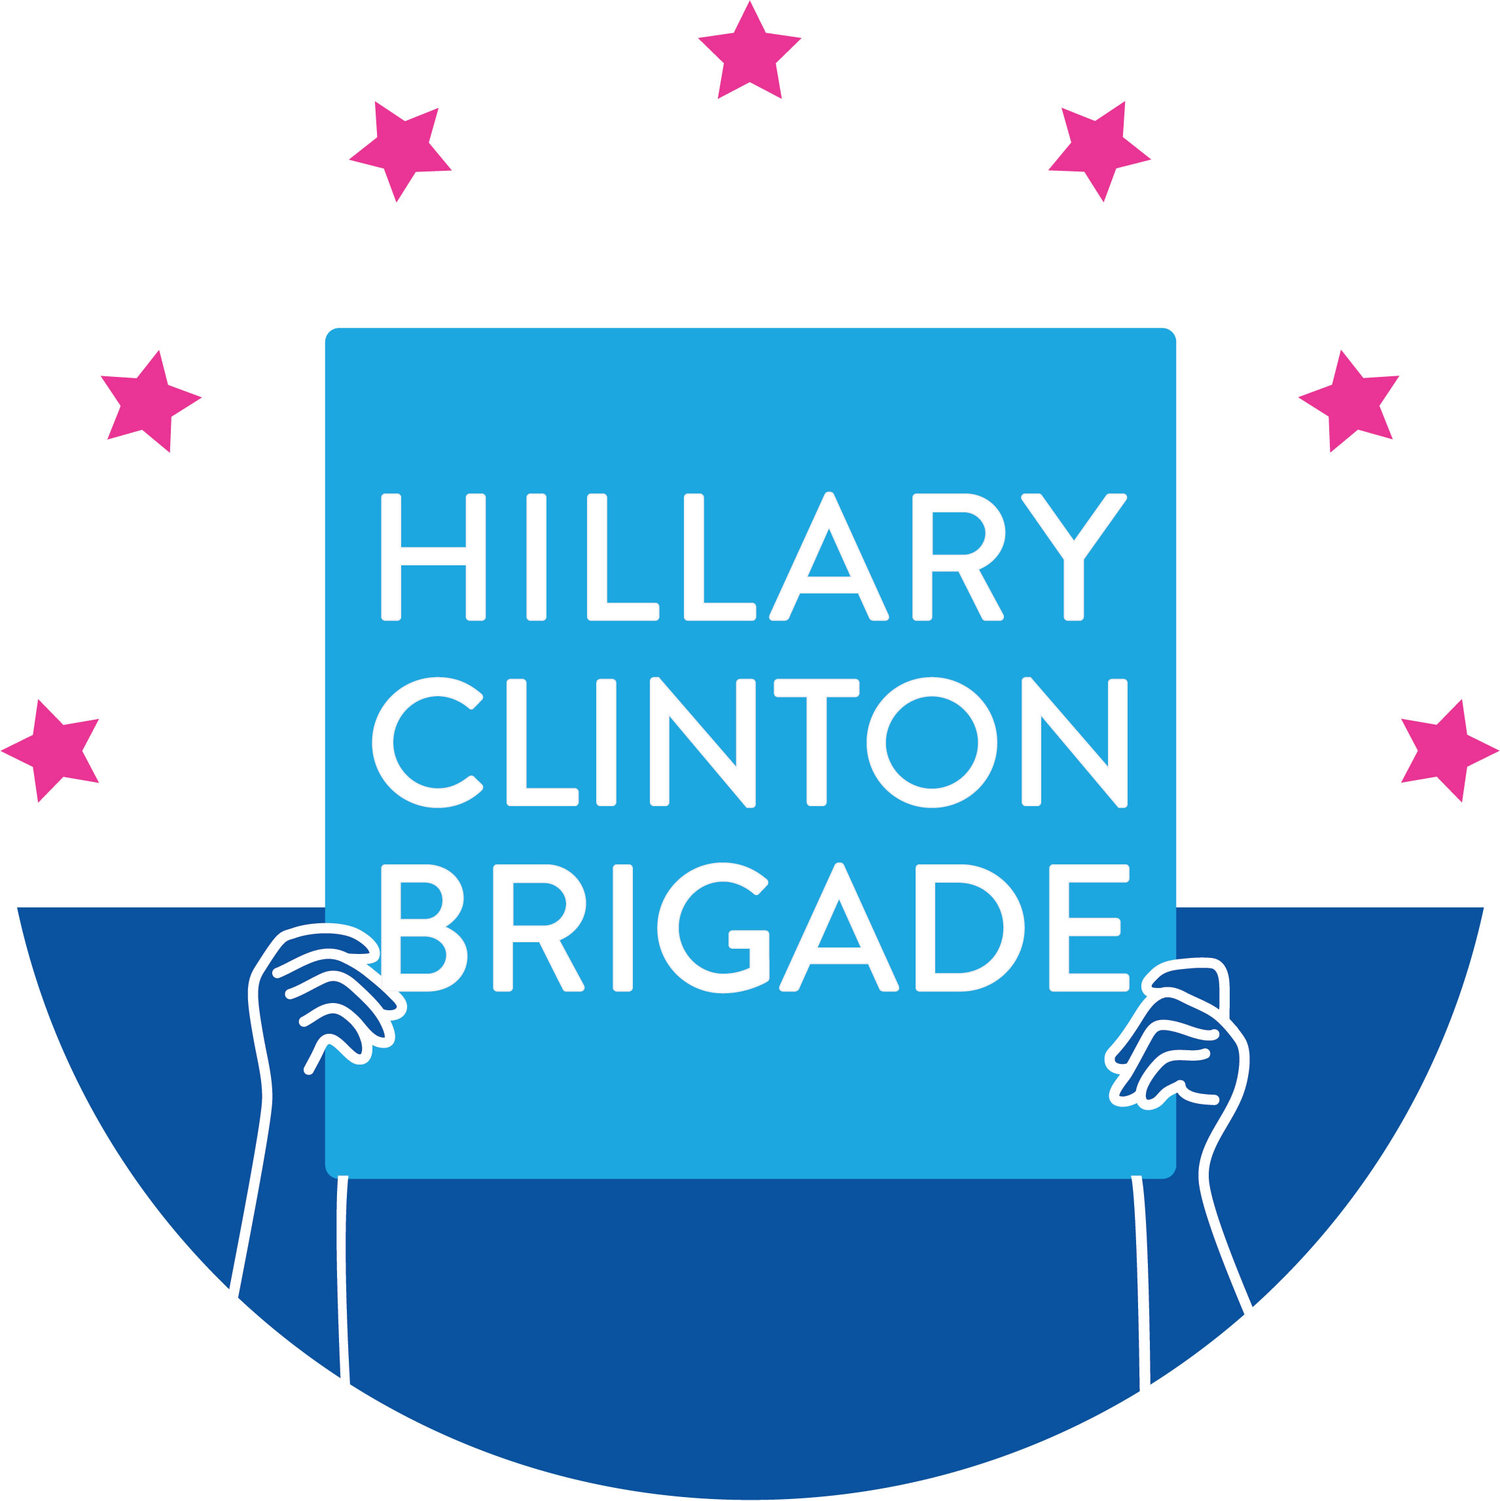 Hillary Clinton Brigade